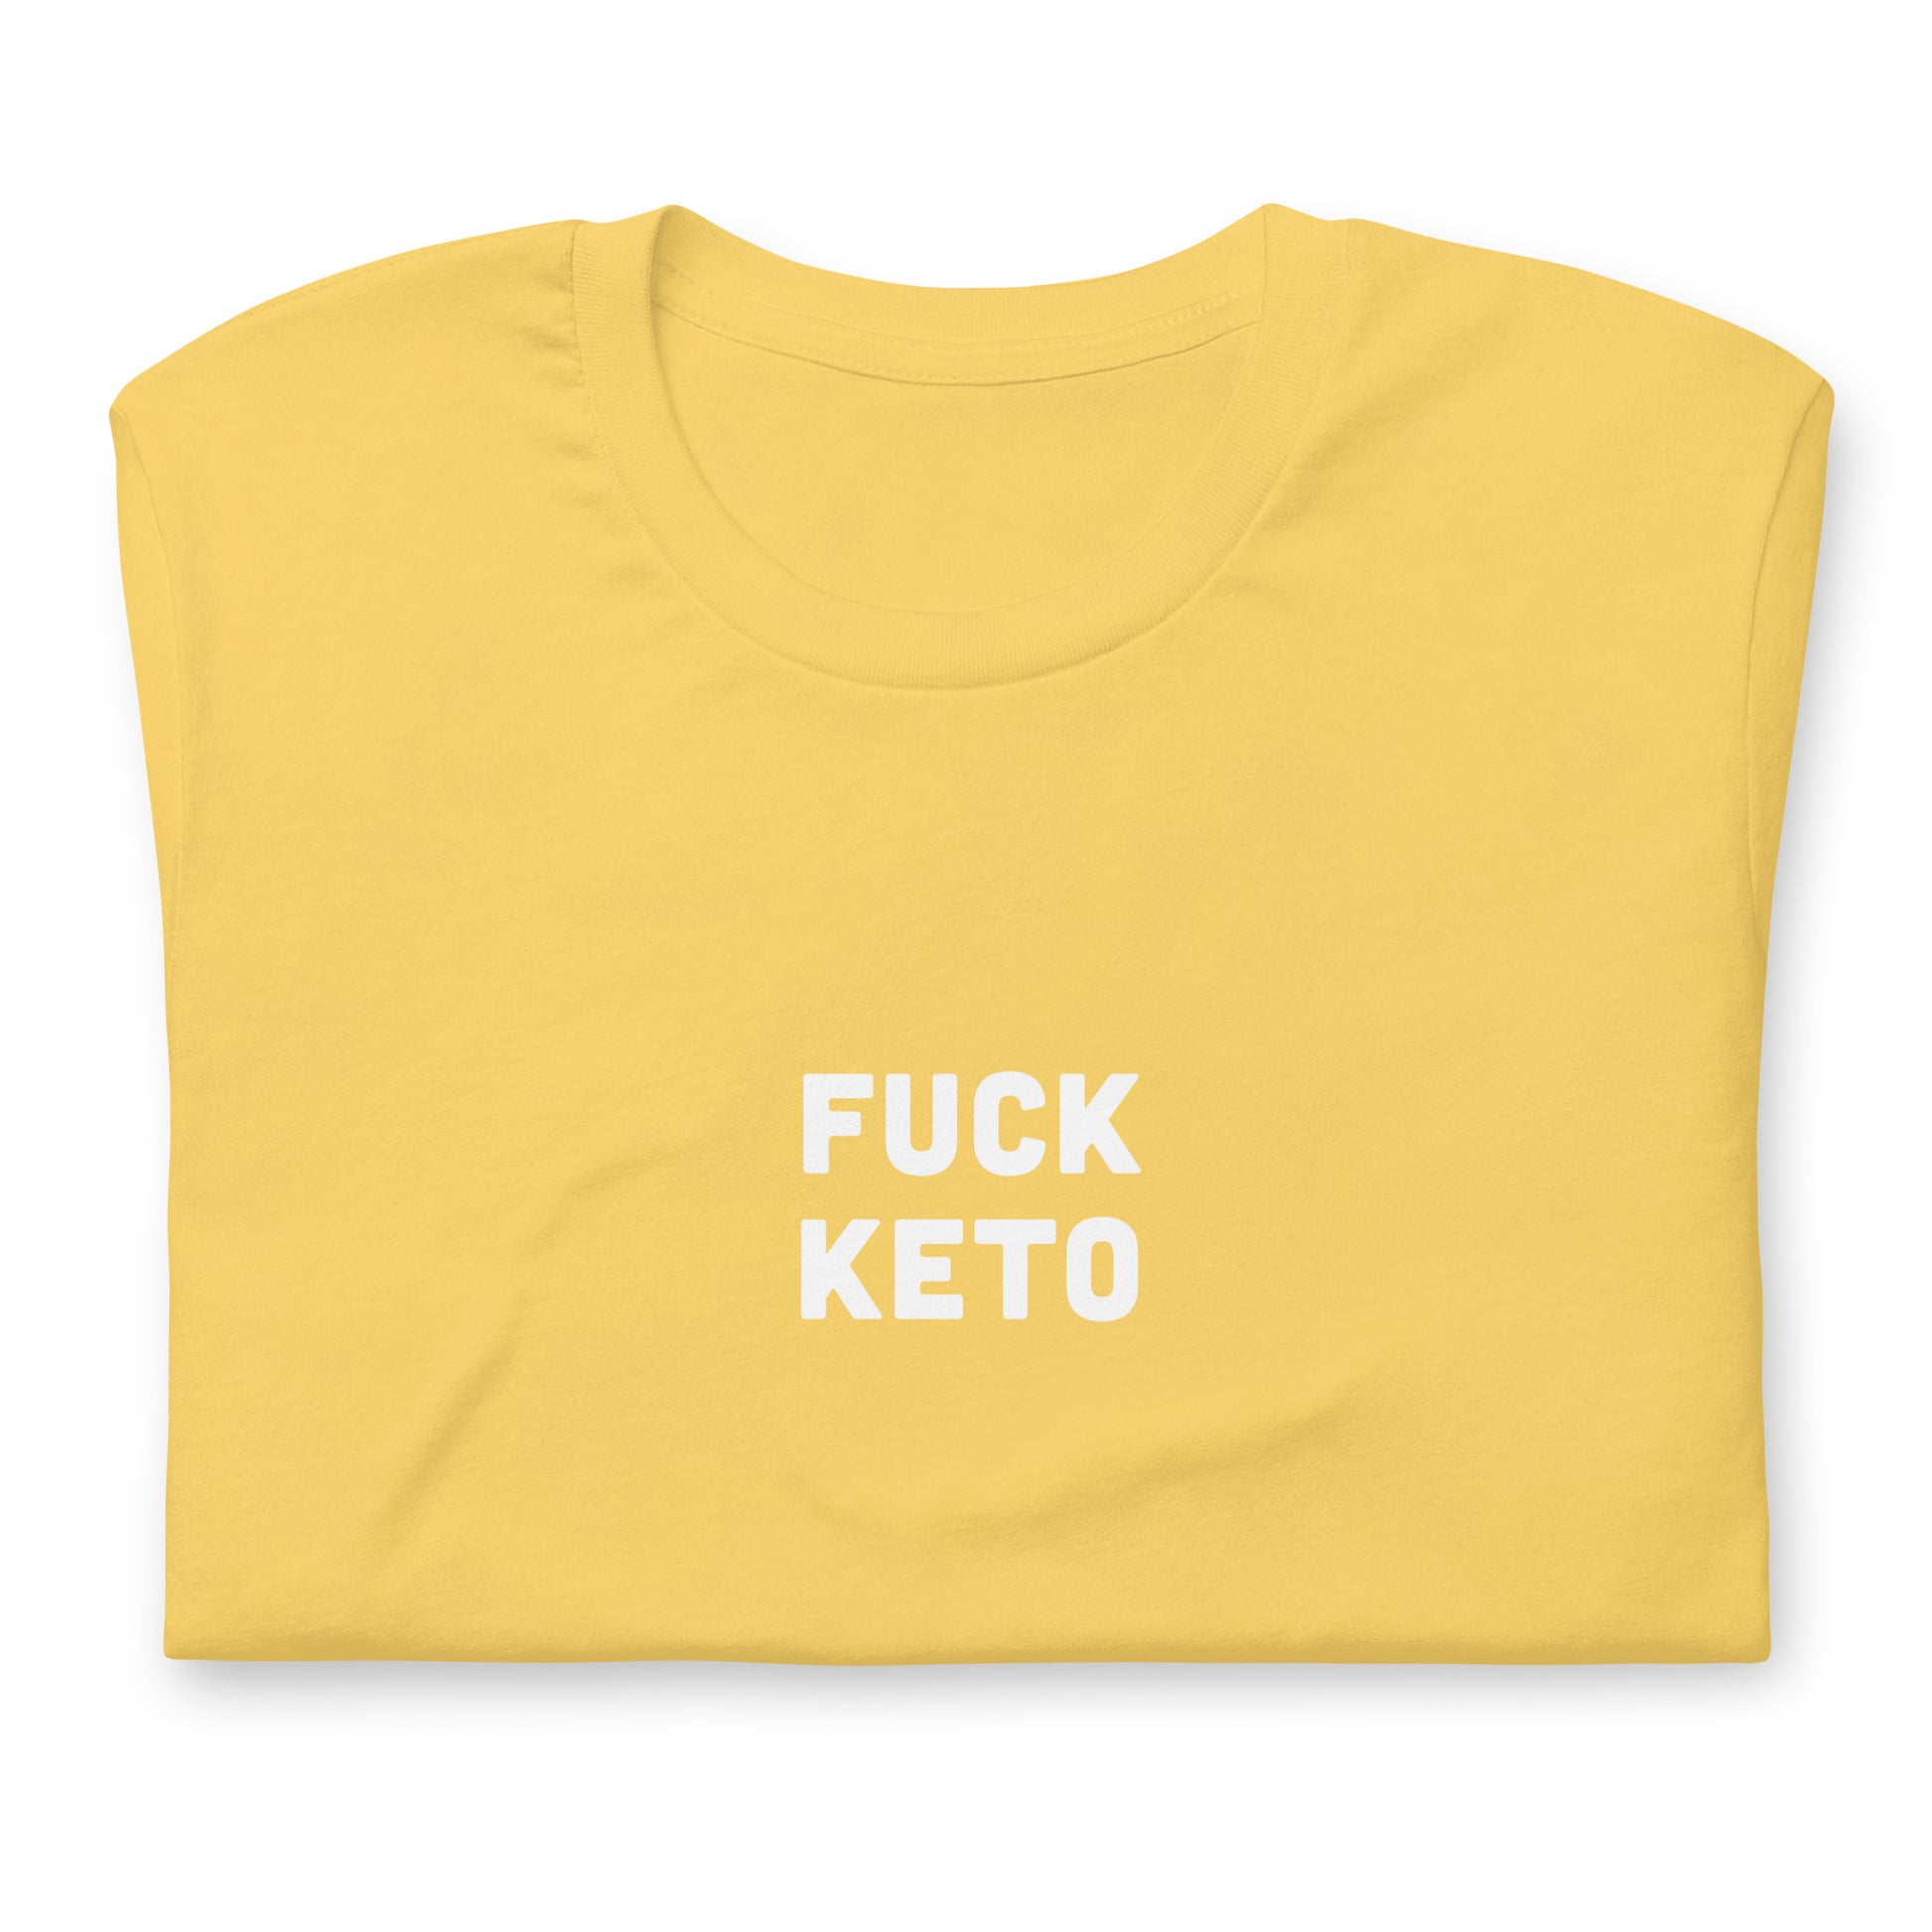 Fuck Keto T-Shirt Size M Color Black